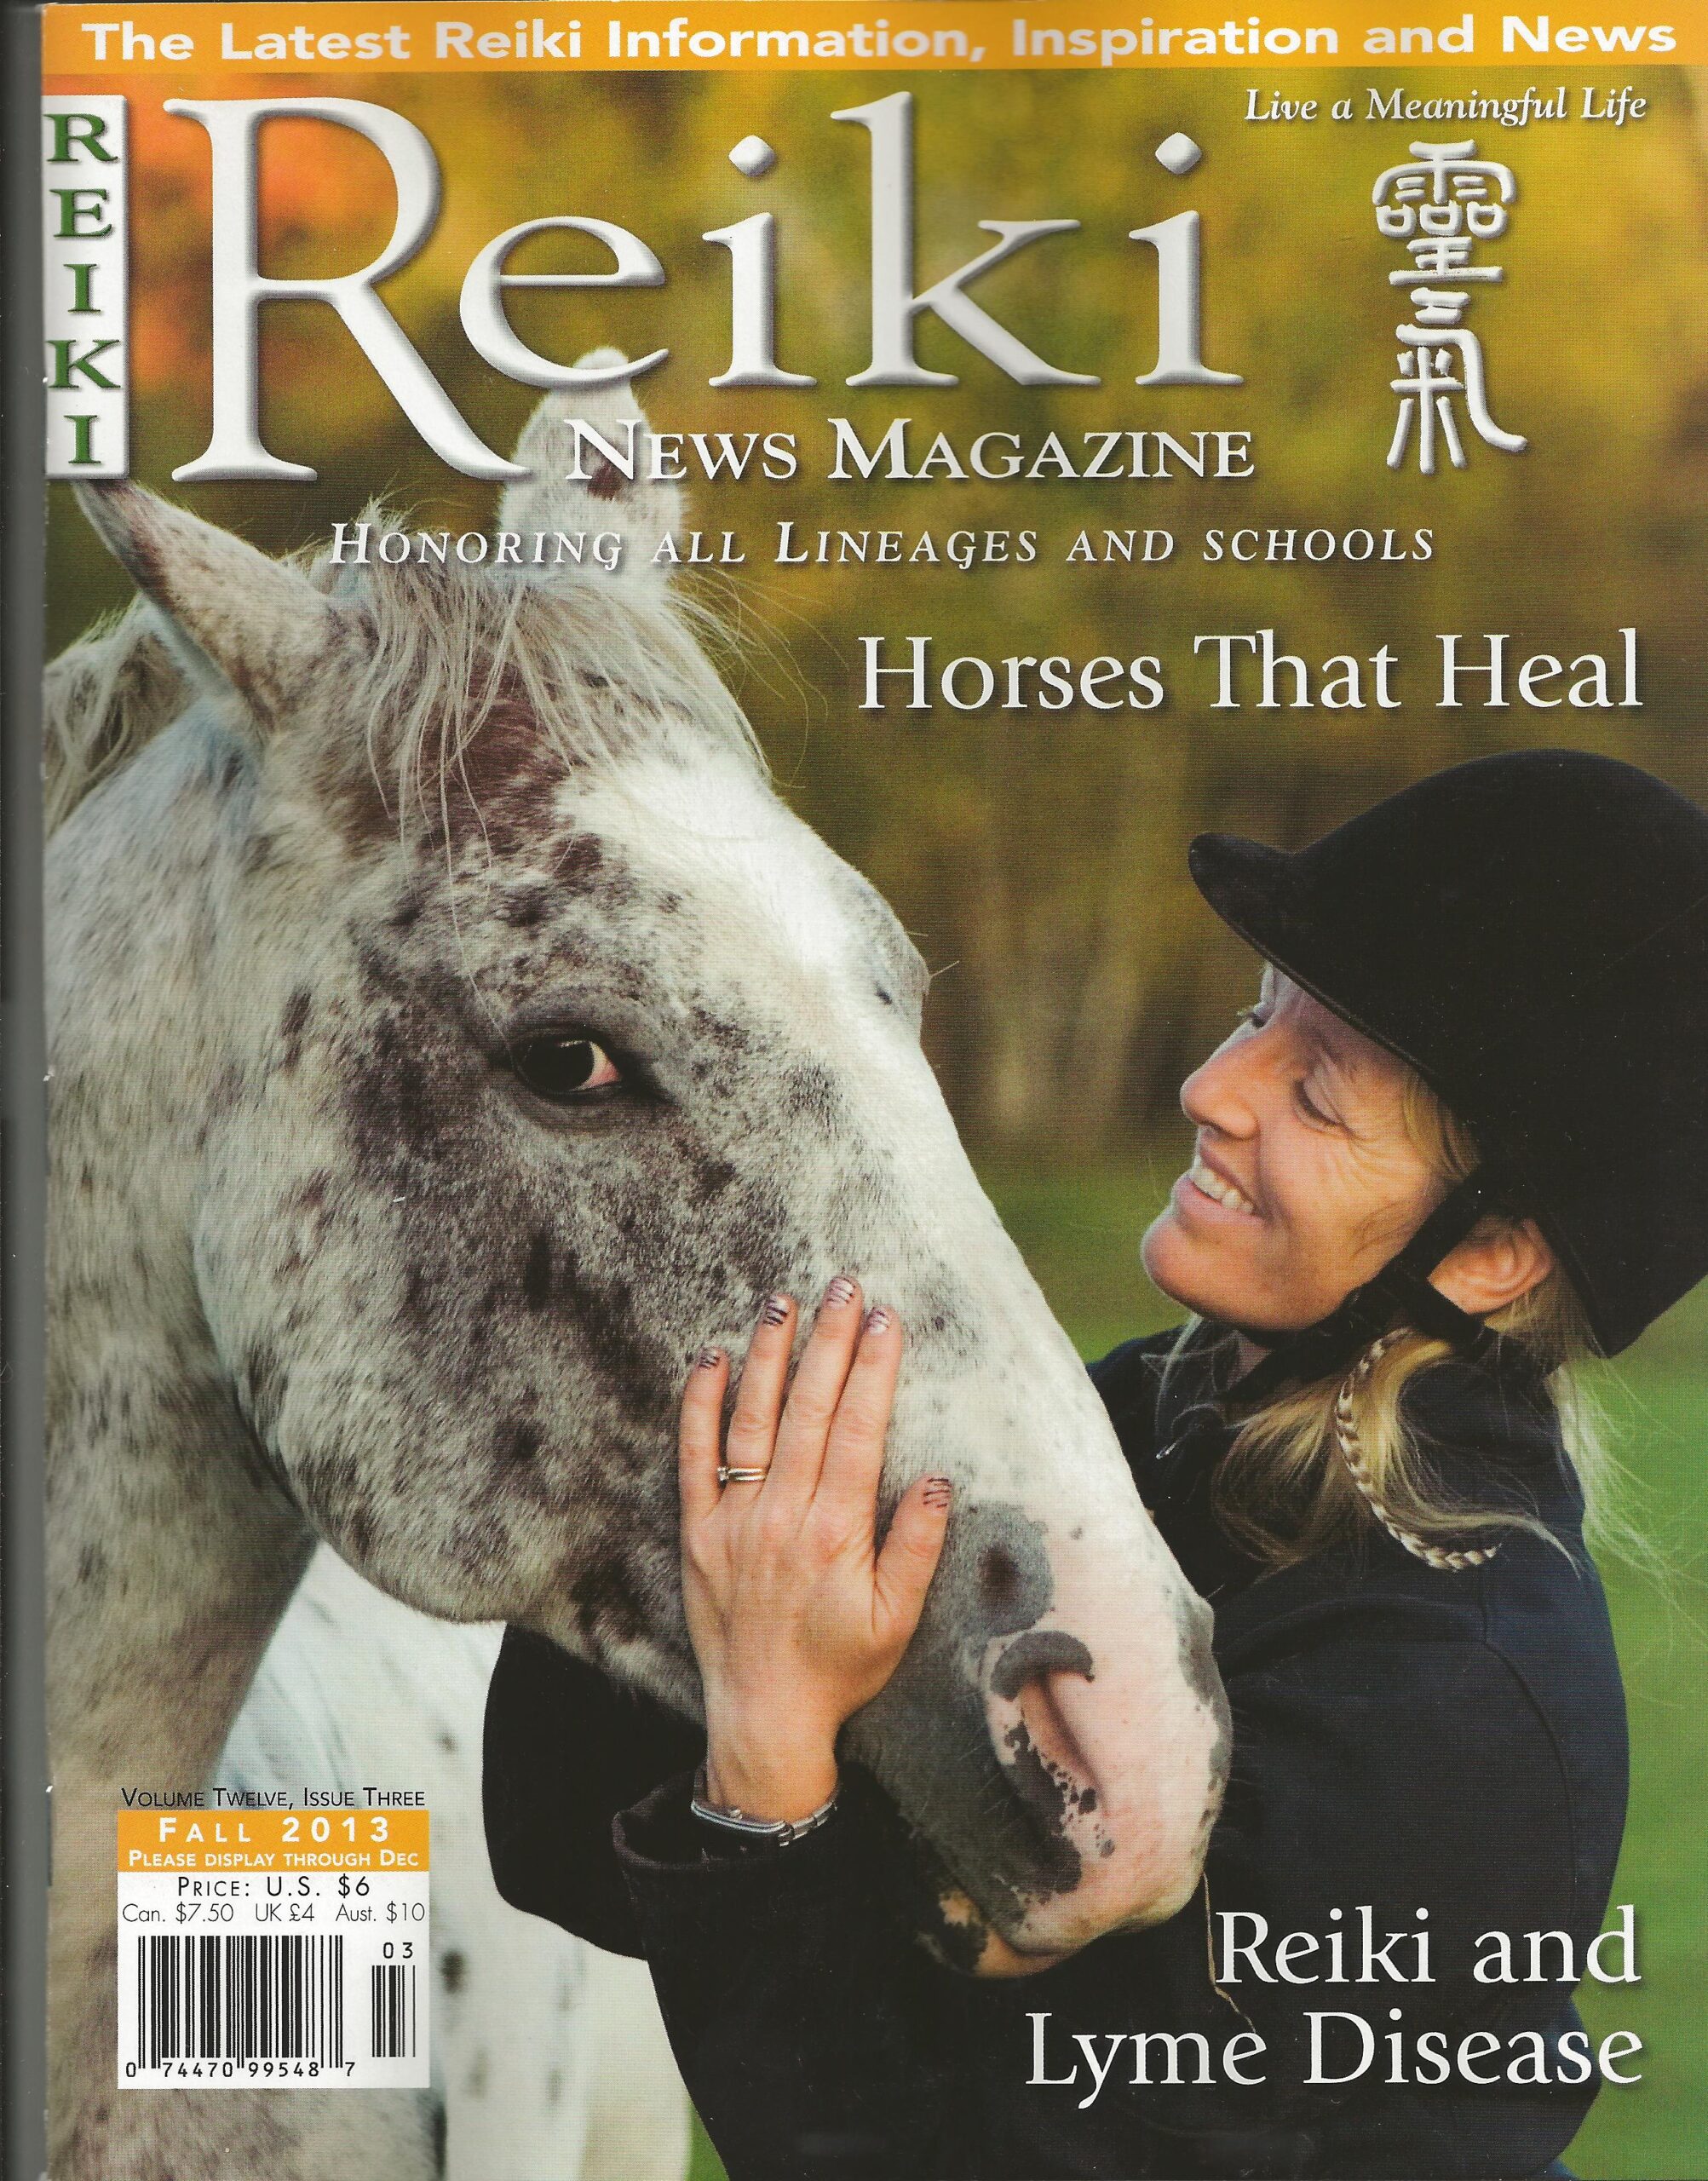 Horses that Heal